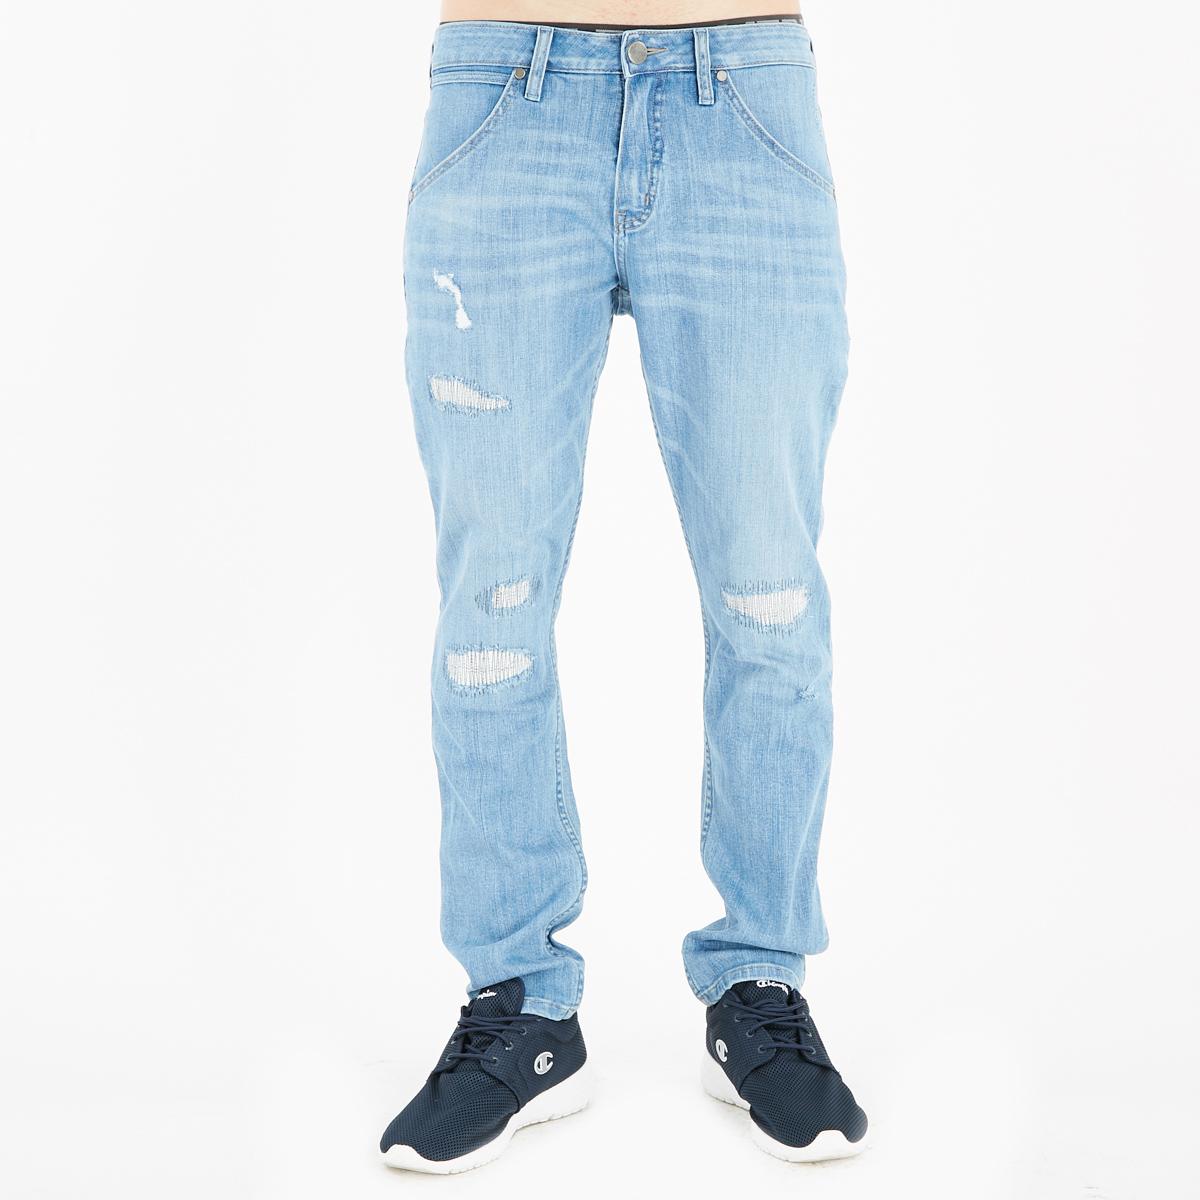 wrangler distressed jeans